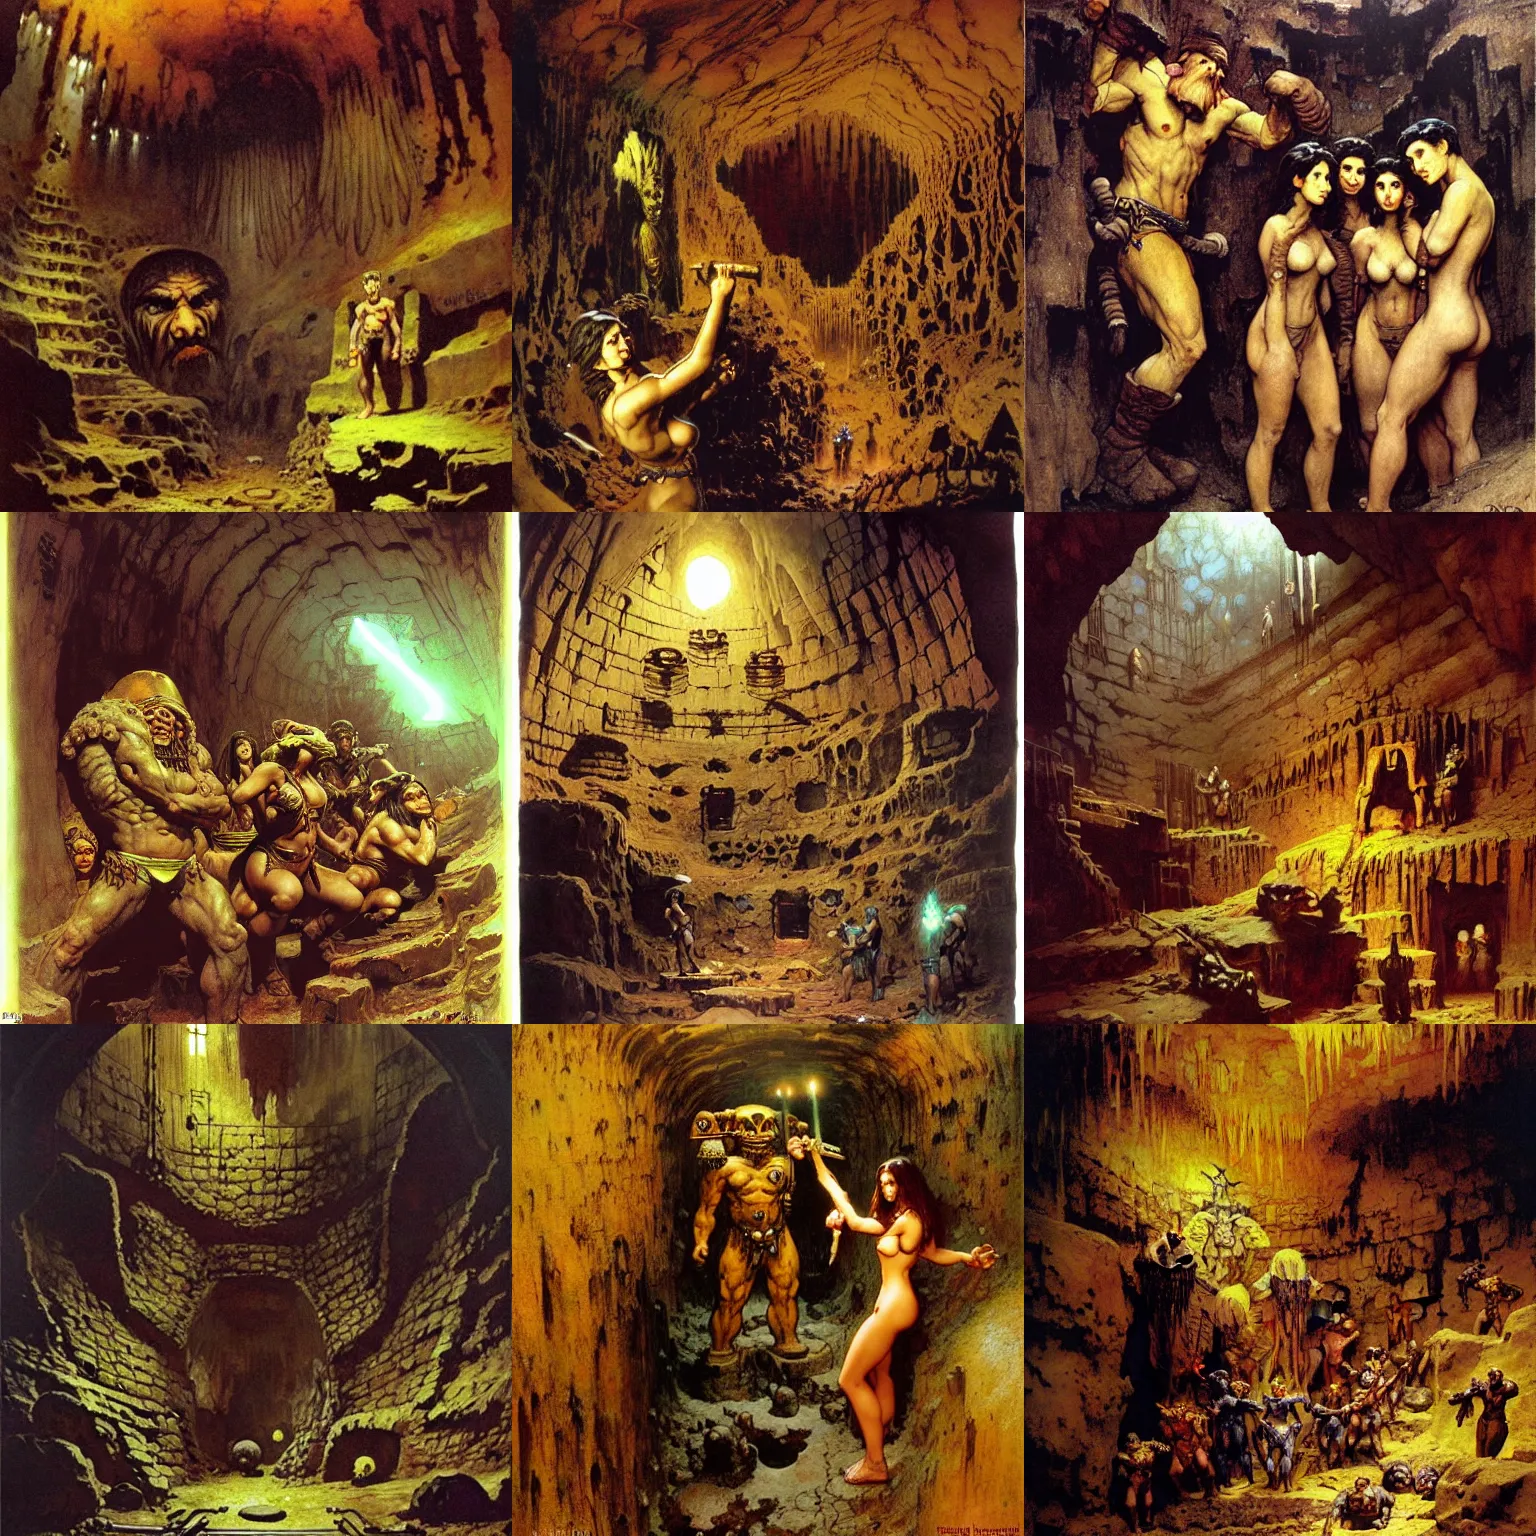 Prompt: deep inside ancient abandoned dwarven gold mine underground by frank frazetta, ken kelly, simon bisley, richard corben, william - adolphe bouguereau